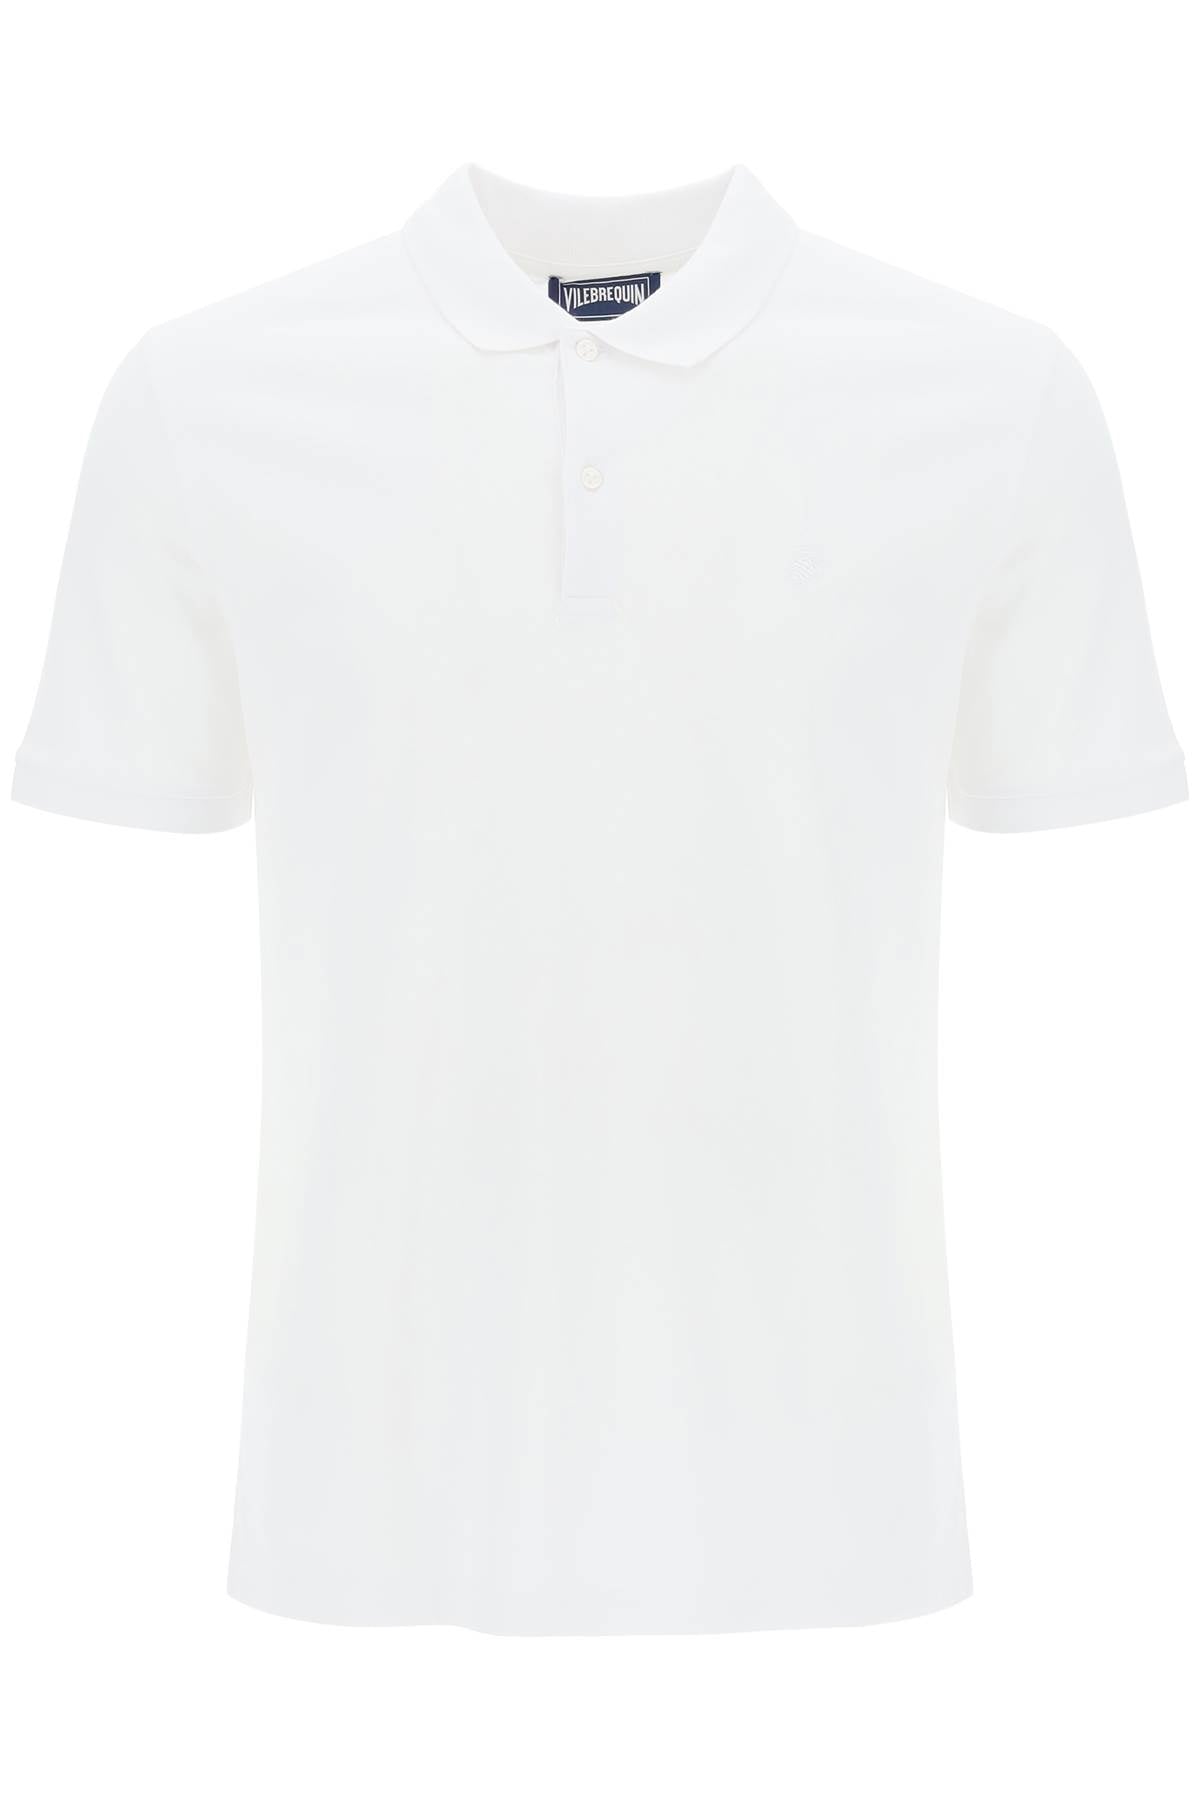 Vilebrequin regular fit cotton polo shirt-0